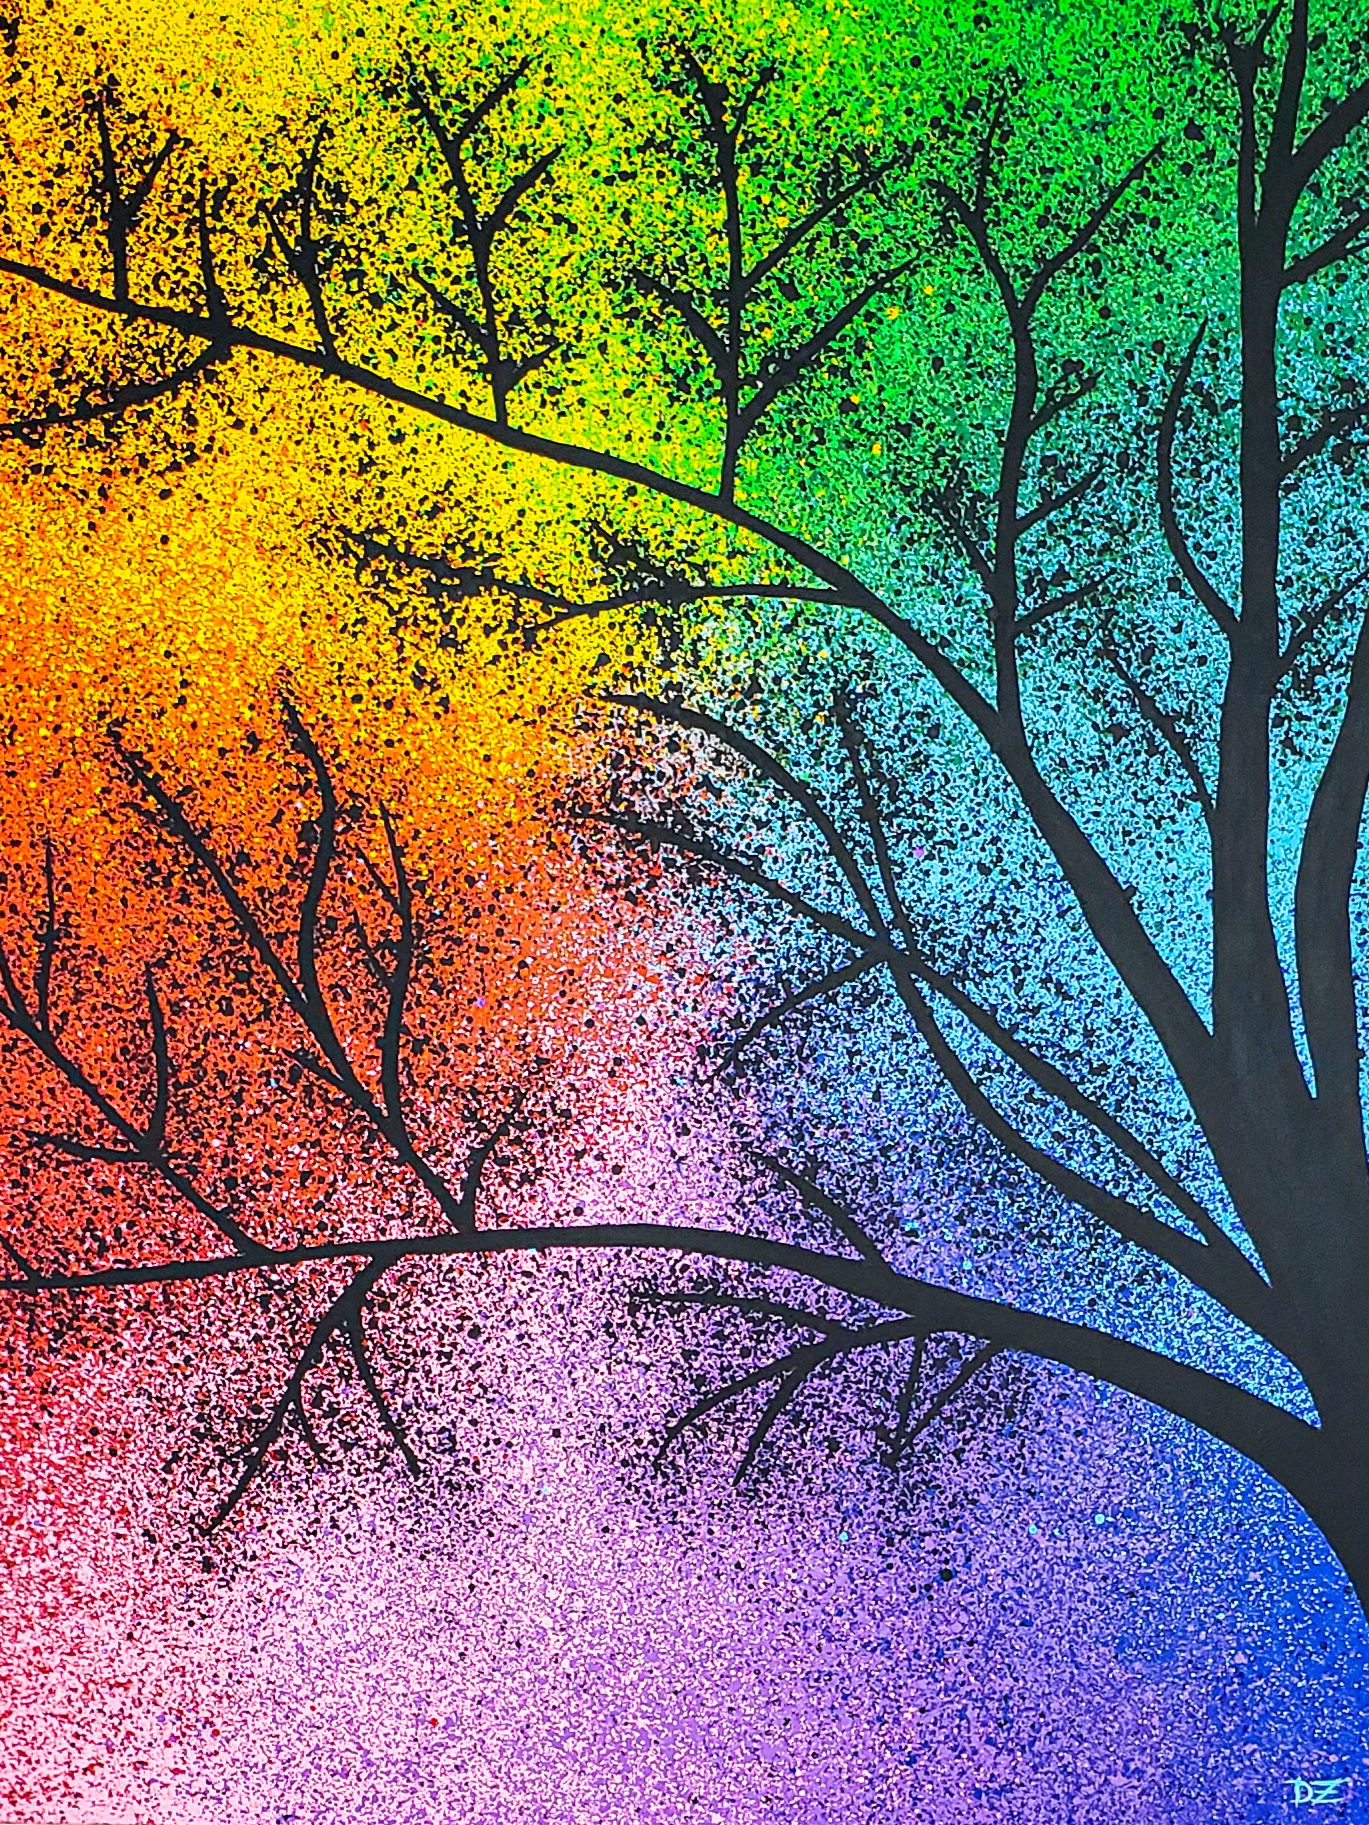 Árvore imersa em cores